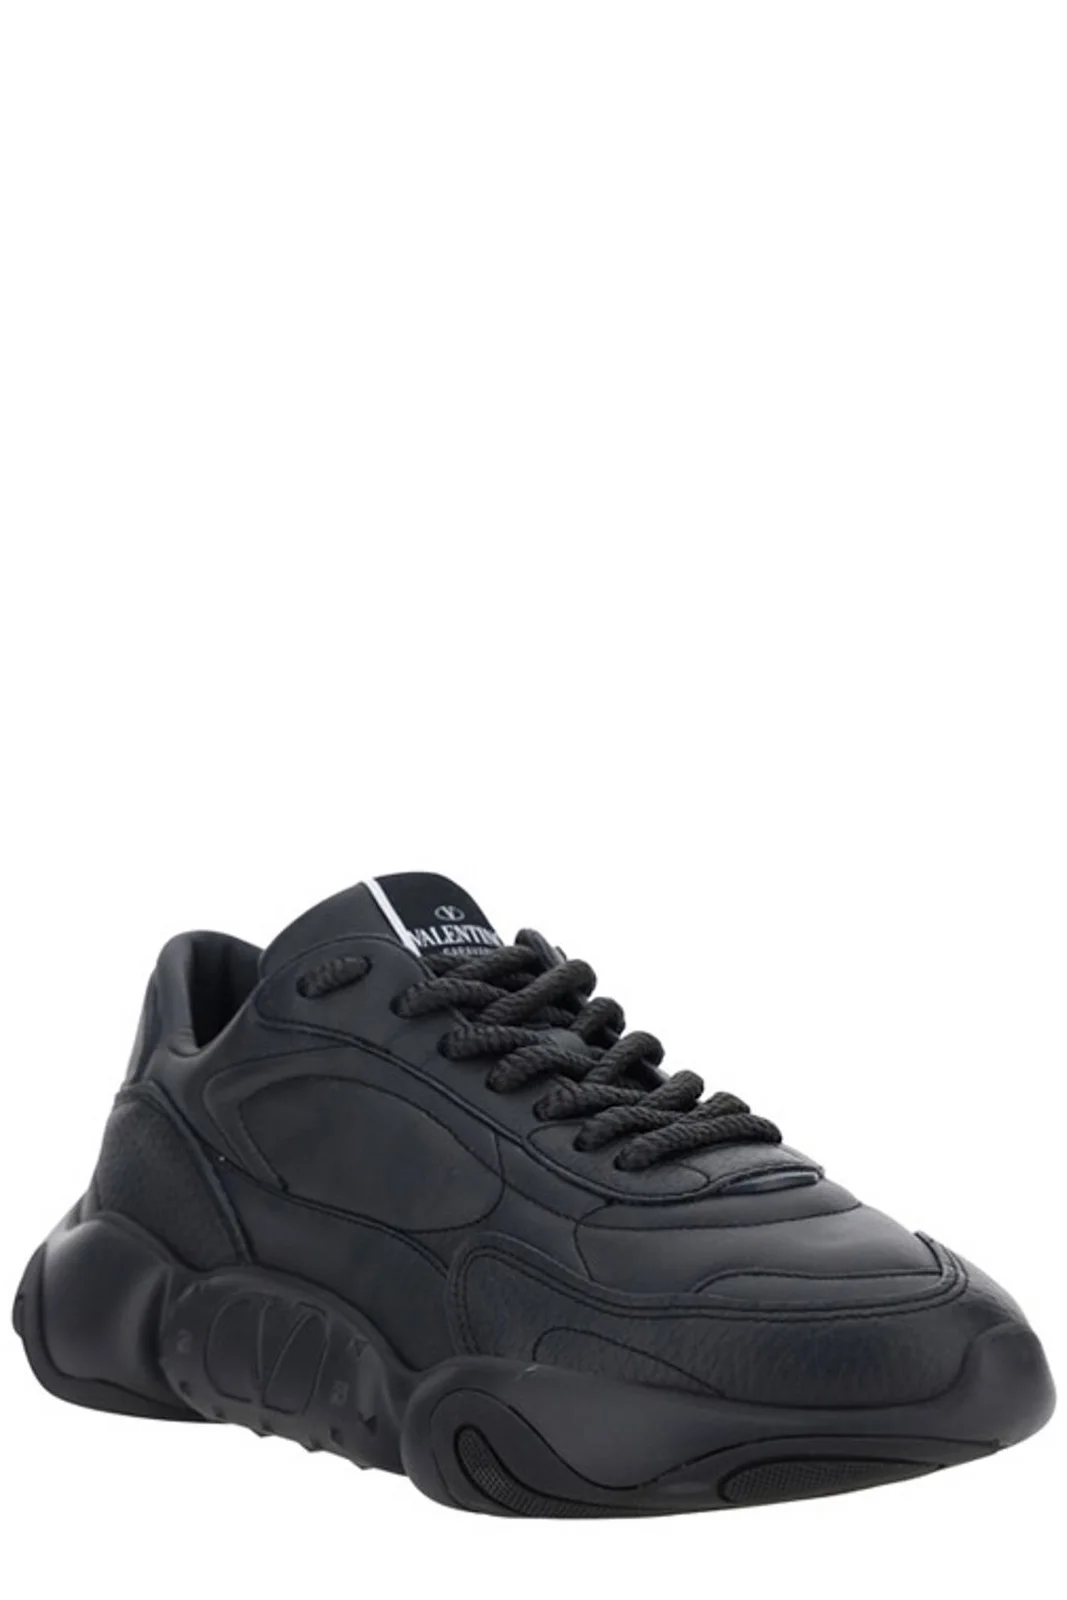 Black Valentino Black Calf Leather Garavani Sneakers EU40/US7